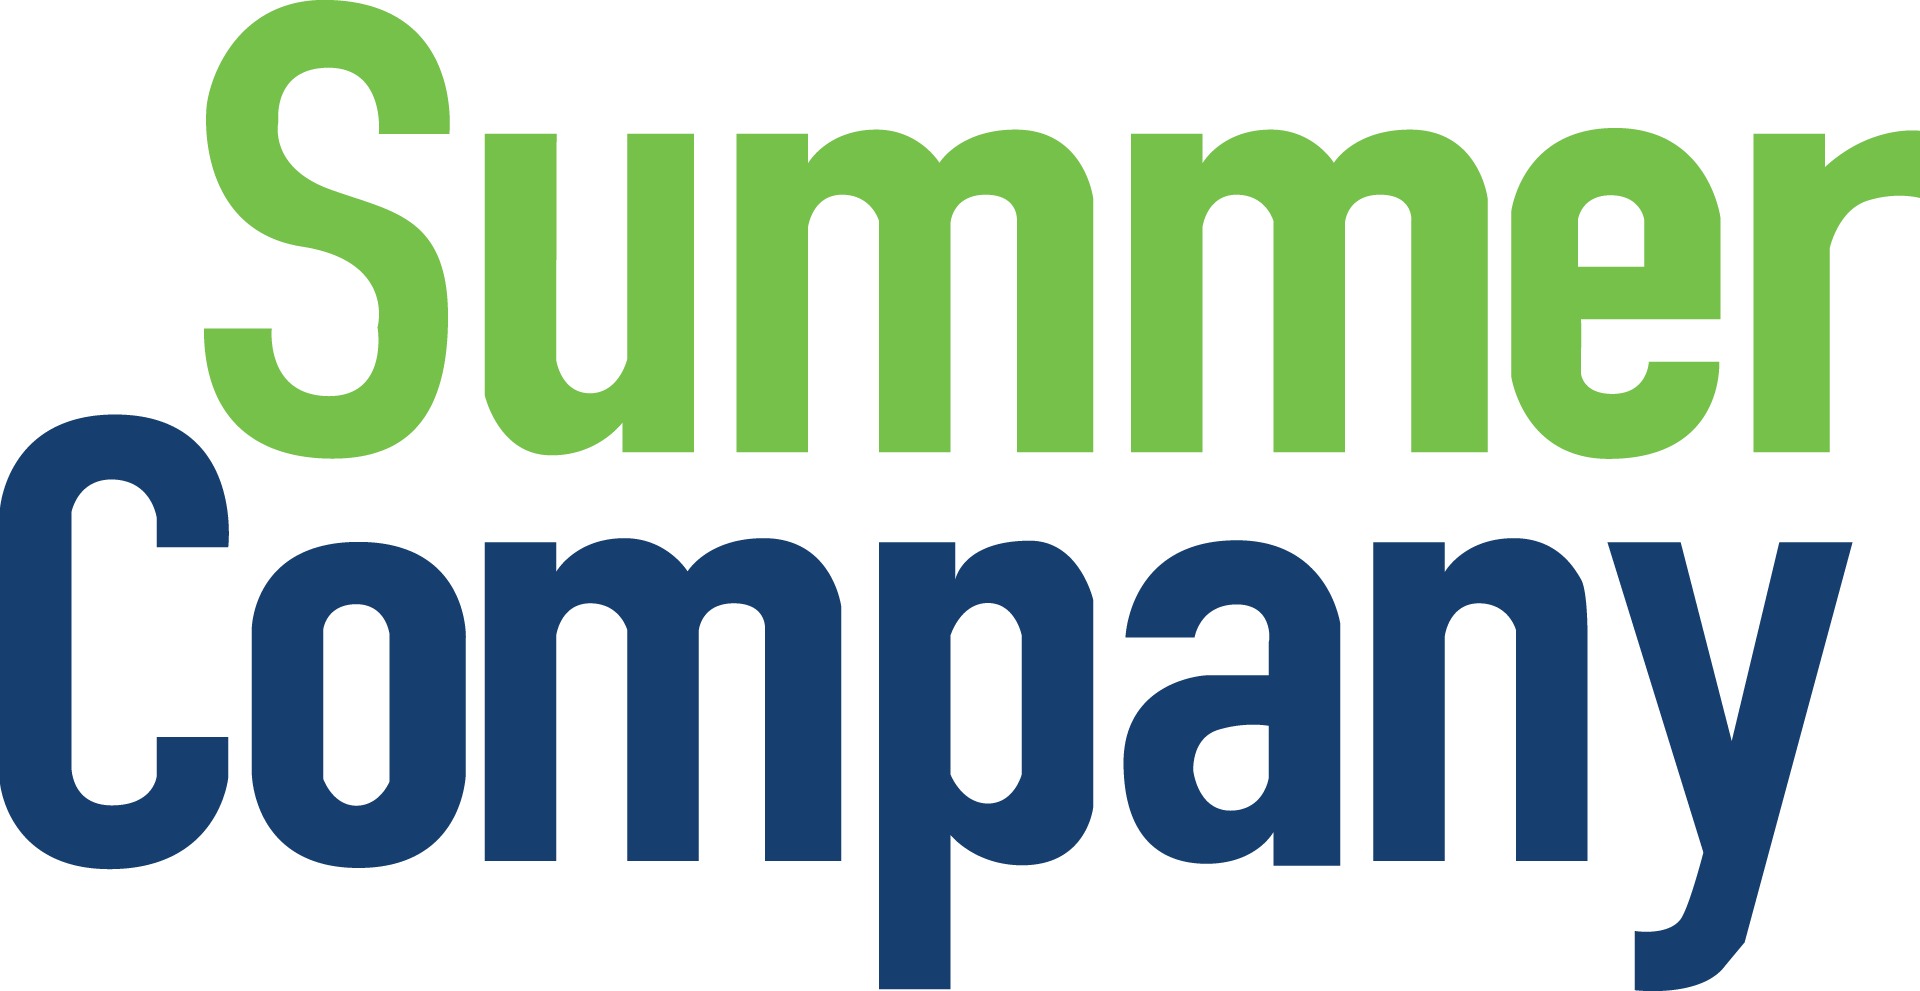 https://northeastbec.com/wp-content/uploads/sites/3/2020/10/Summer-Company-Logo_English-Colour.png